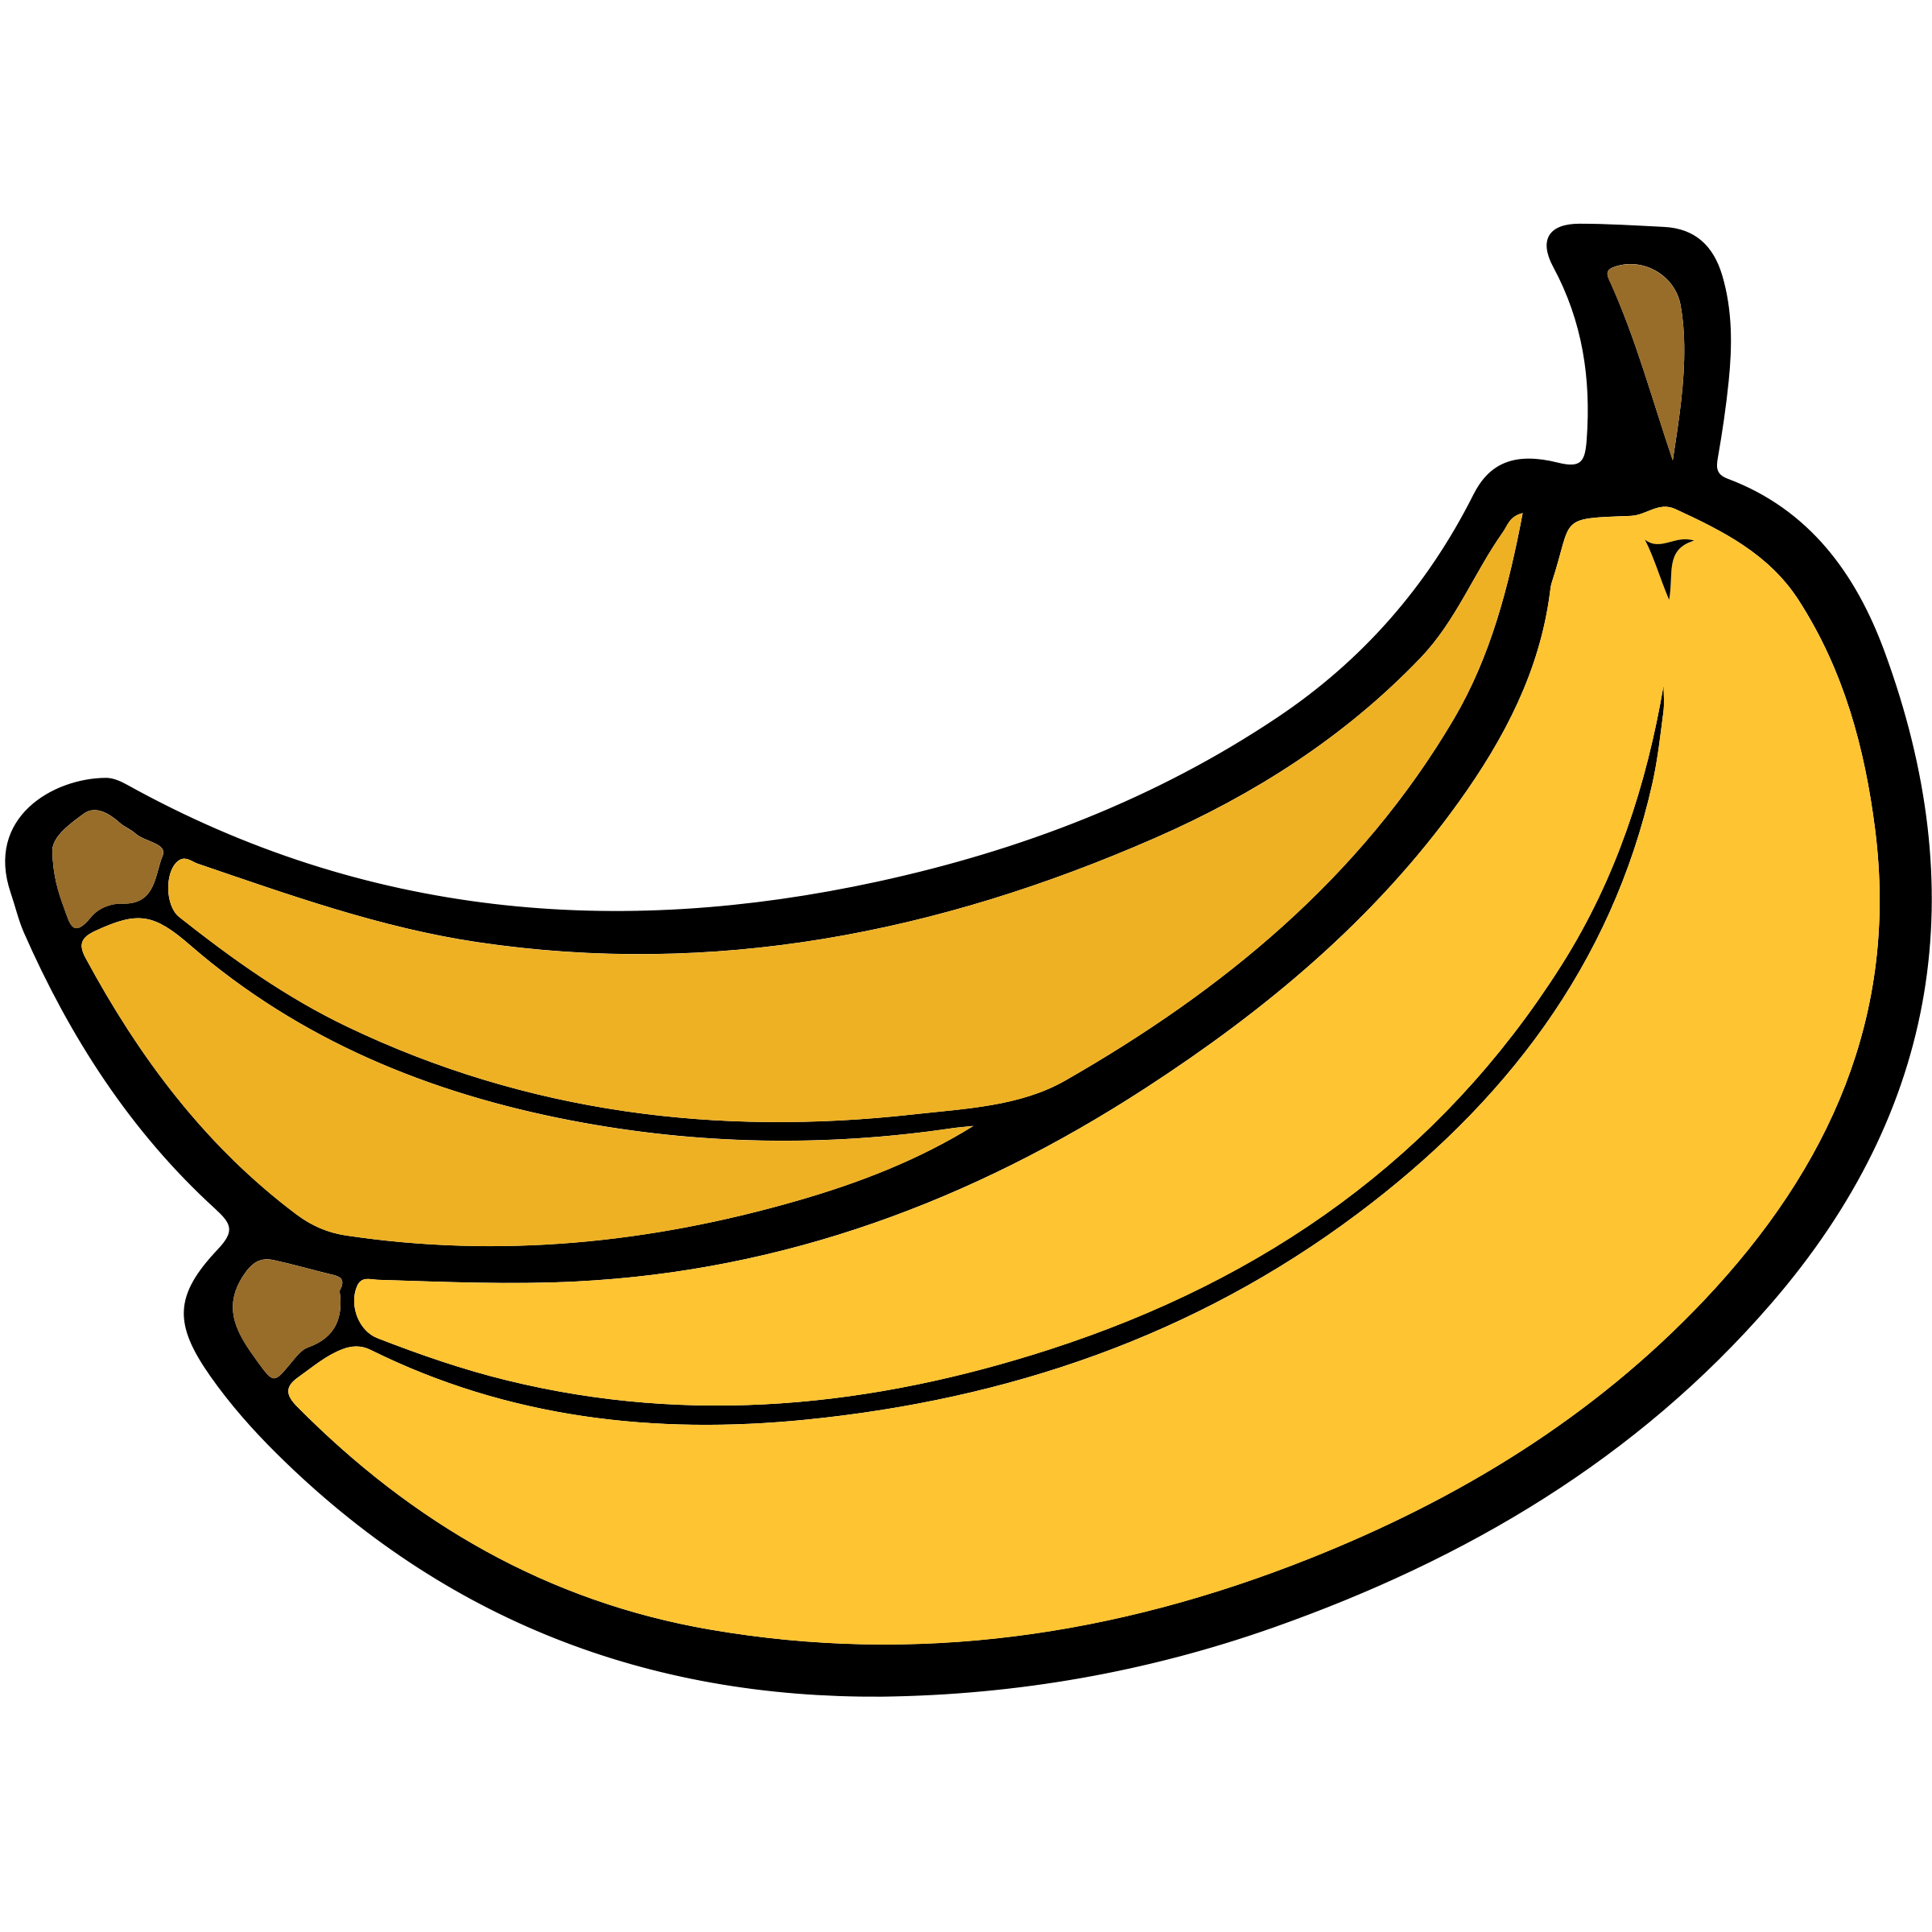 Banana clipart no background